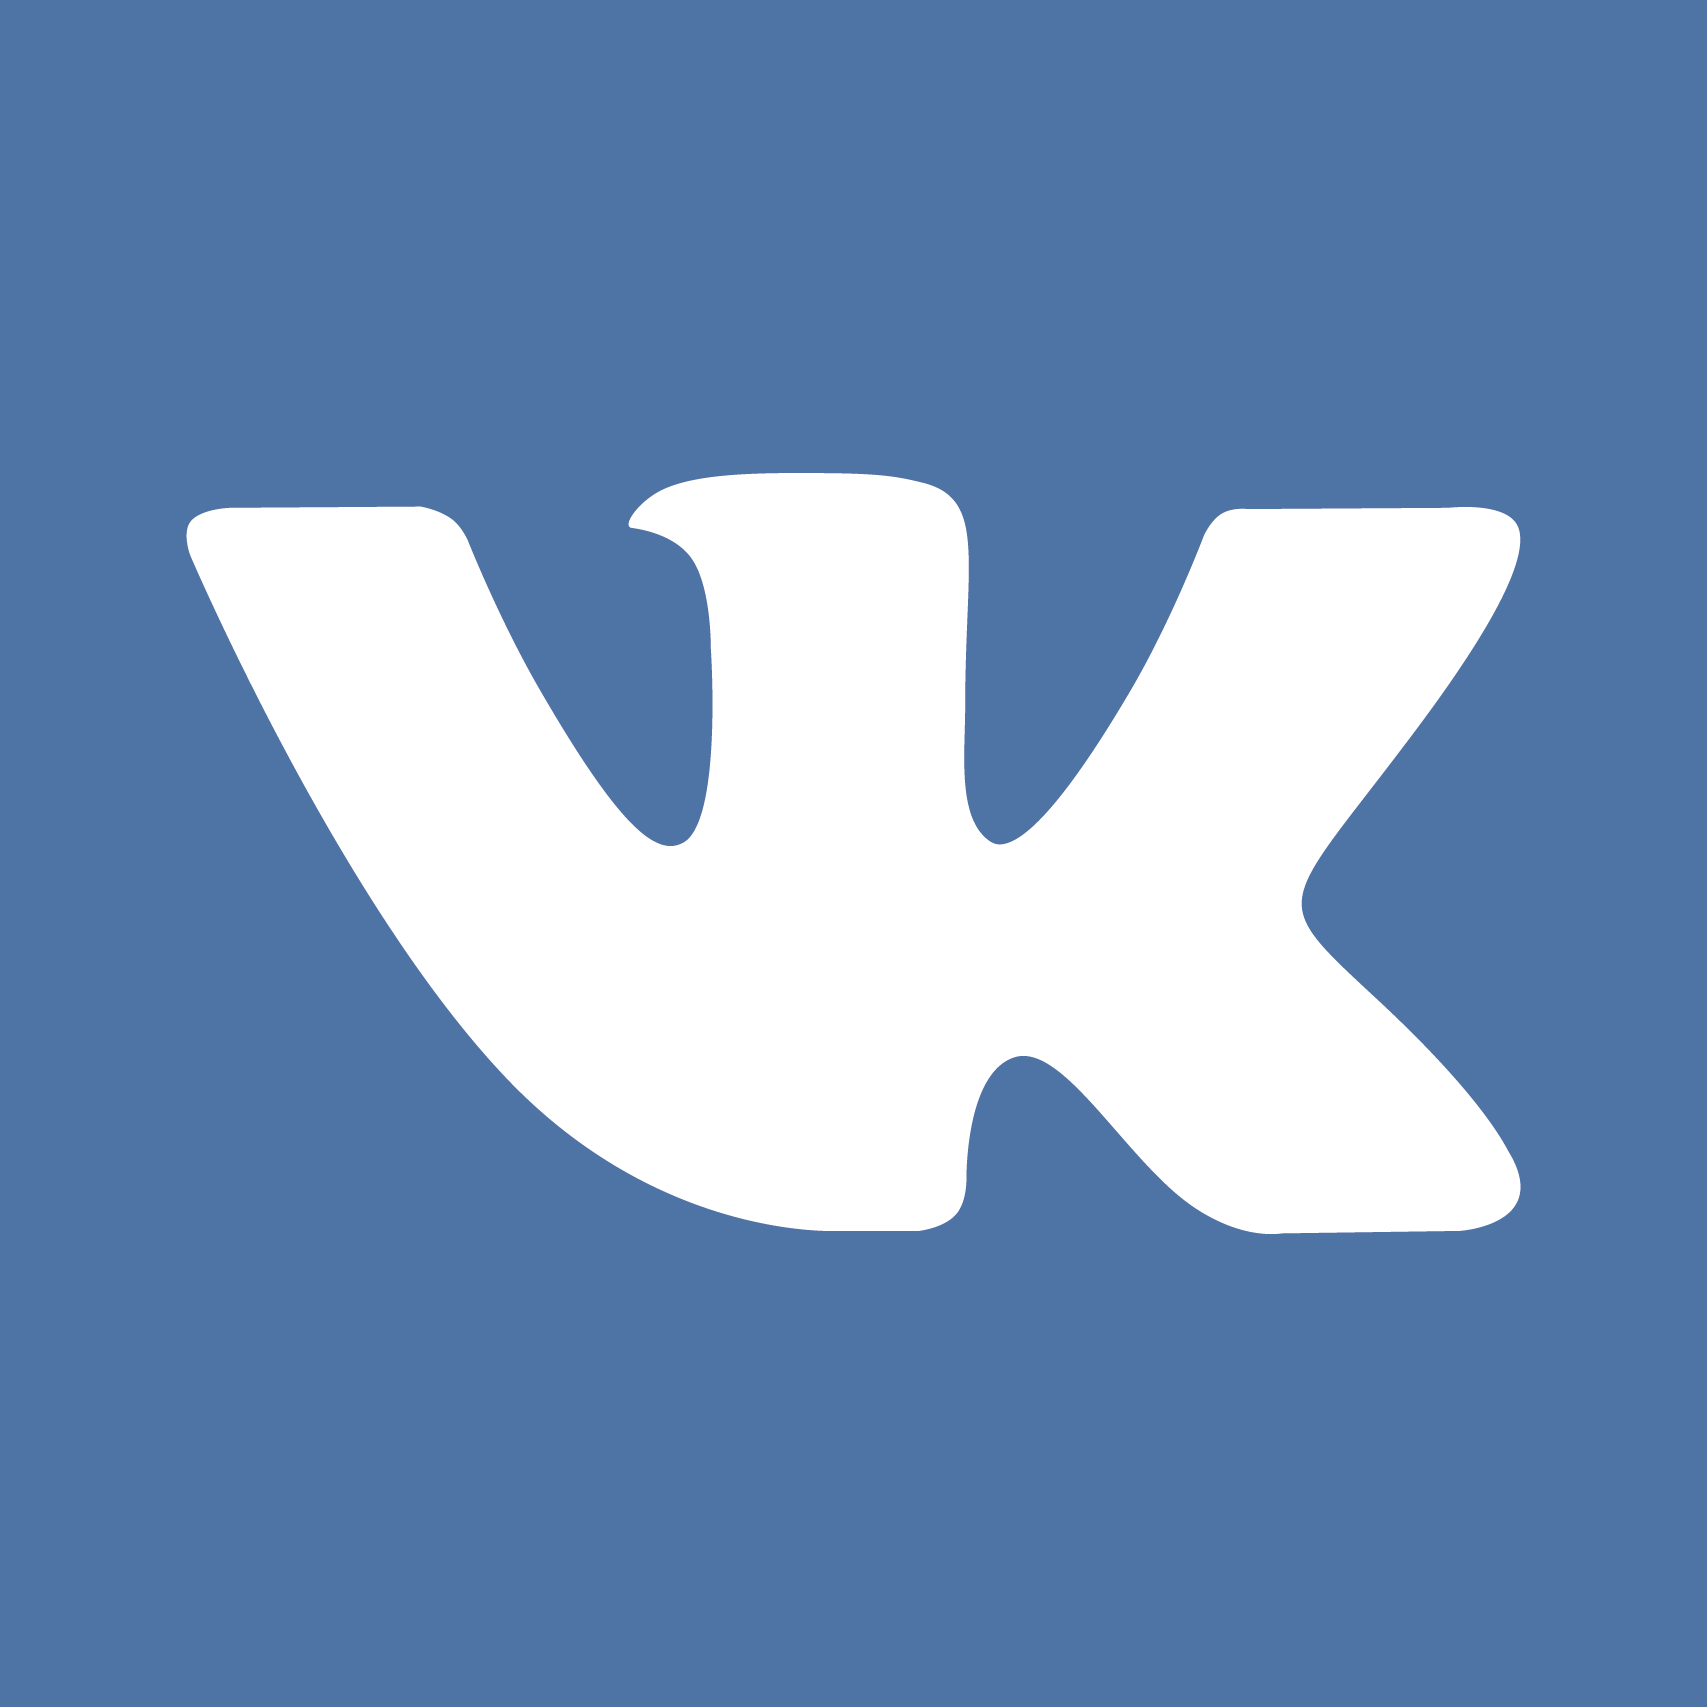 VK Logo [Social Networking] png